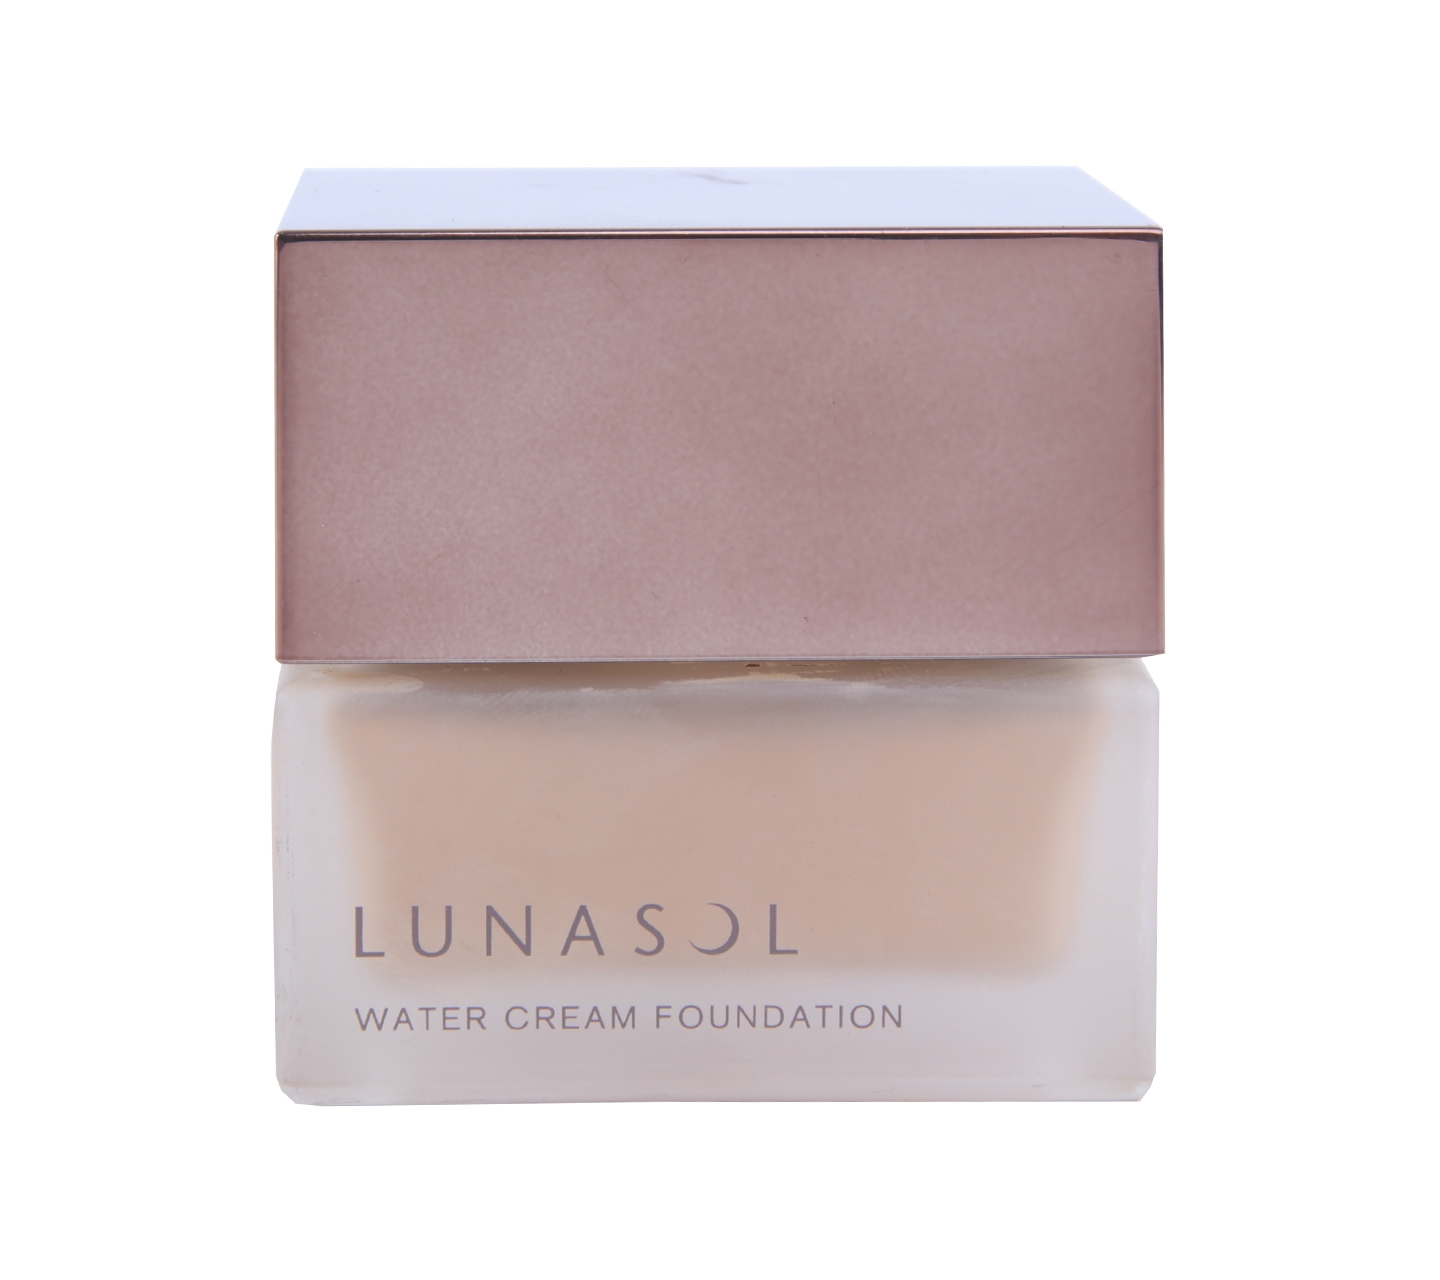 Lunasol Water Cream Foundation Faces